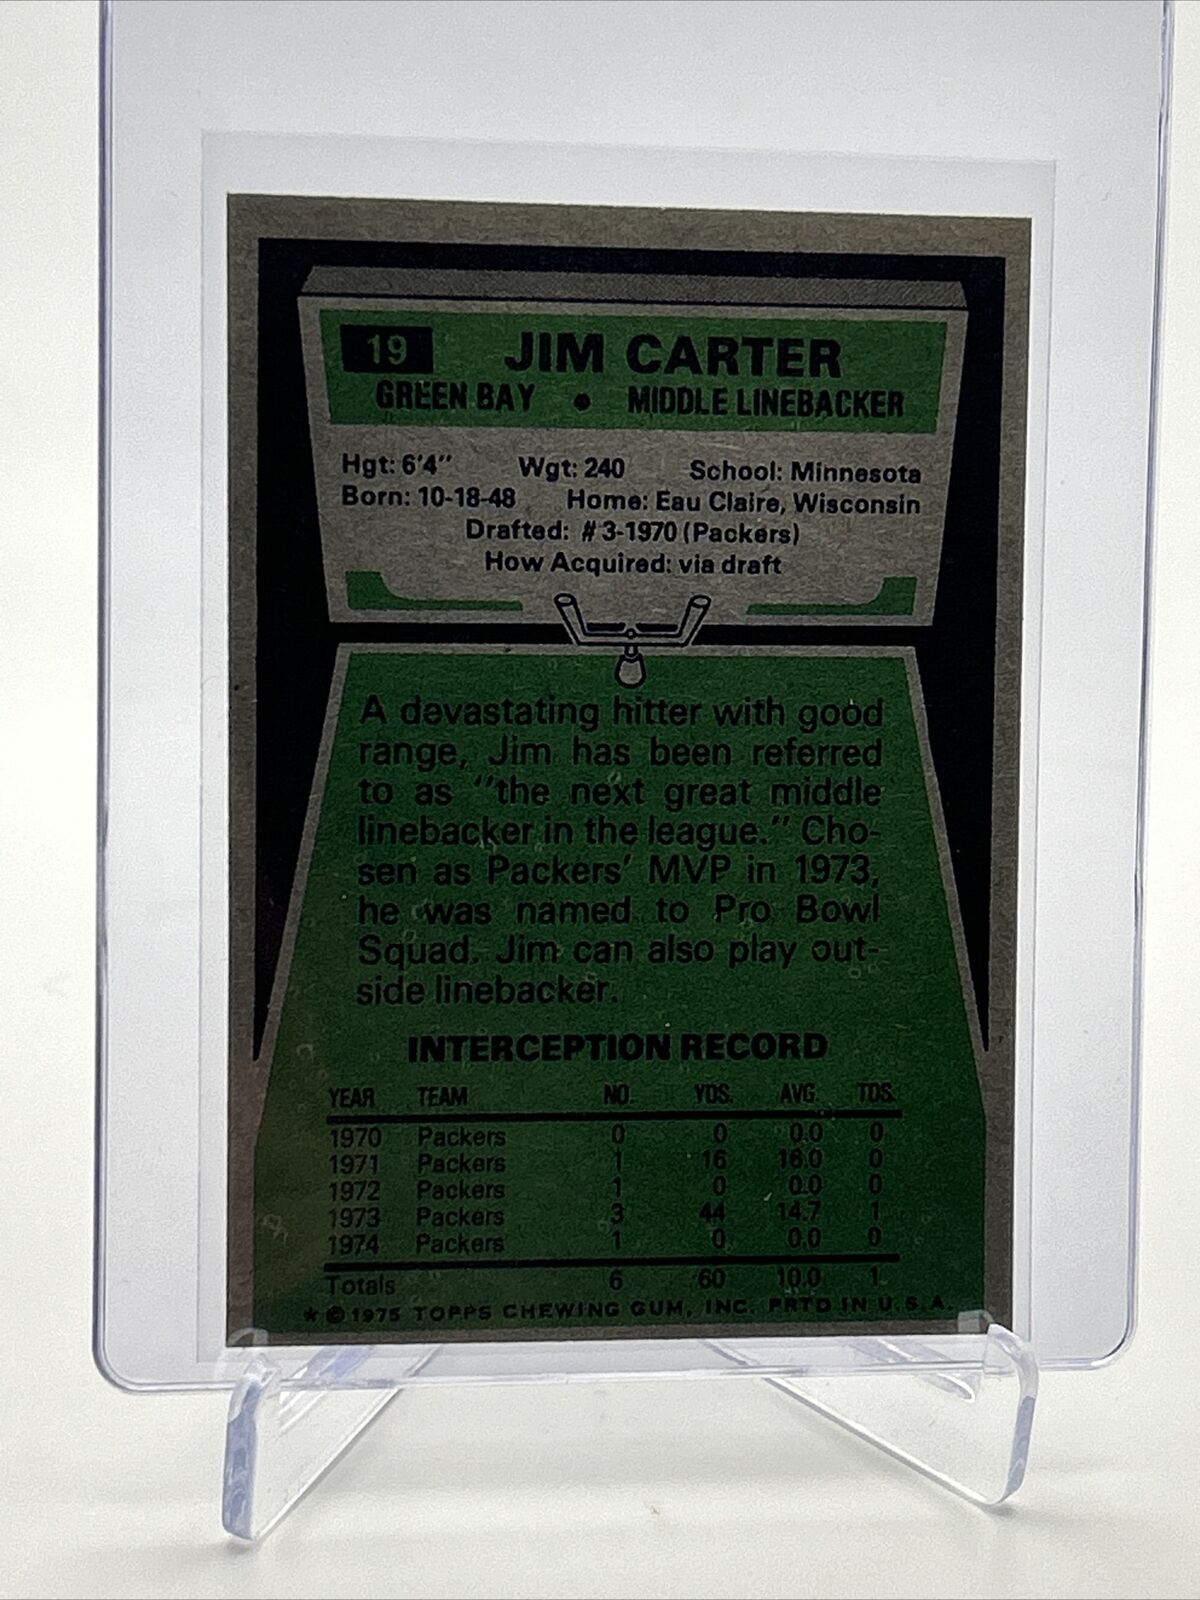 1975 Topps Jim Carter Football Card #19 NM Quality FREE SHIPPING